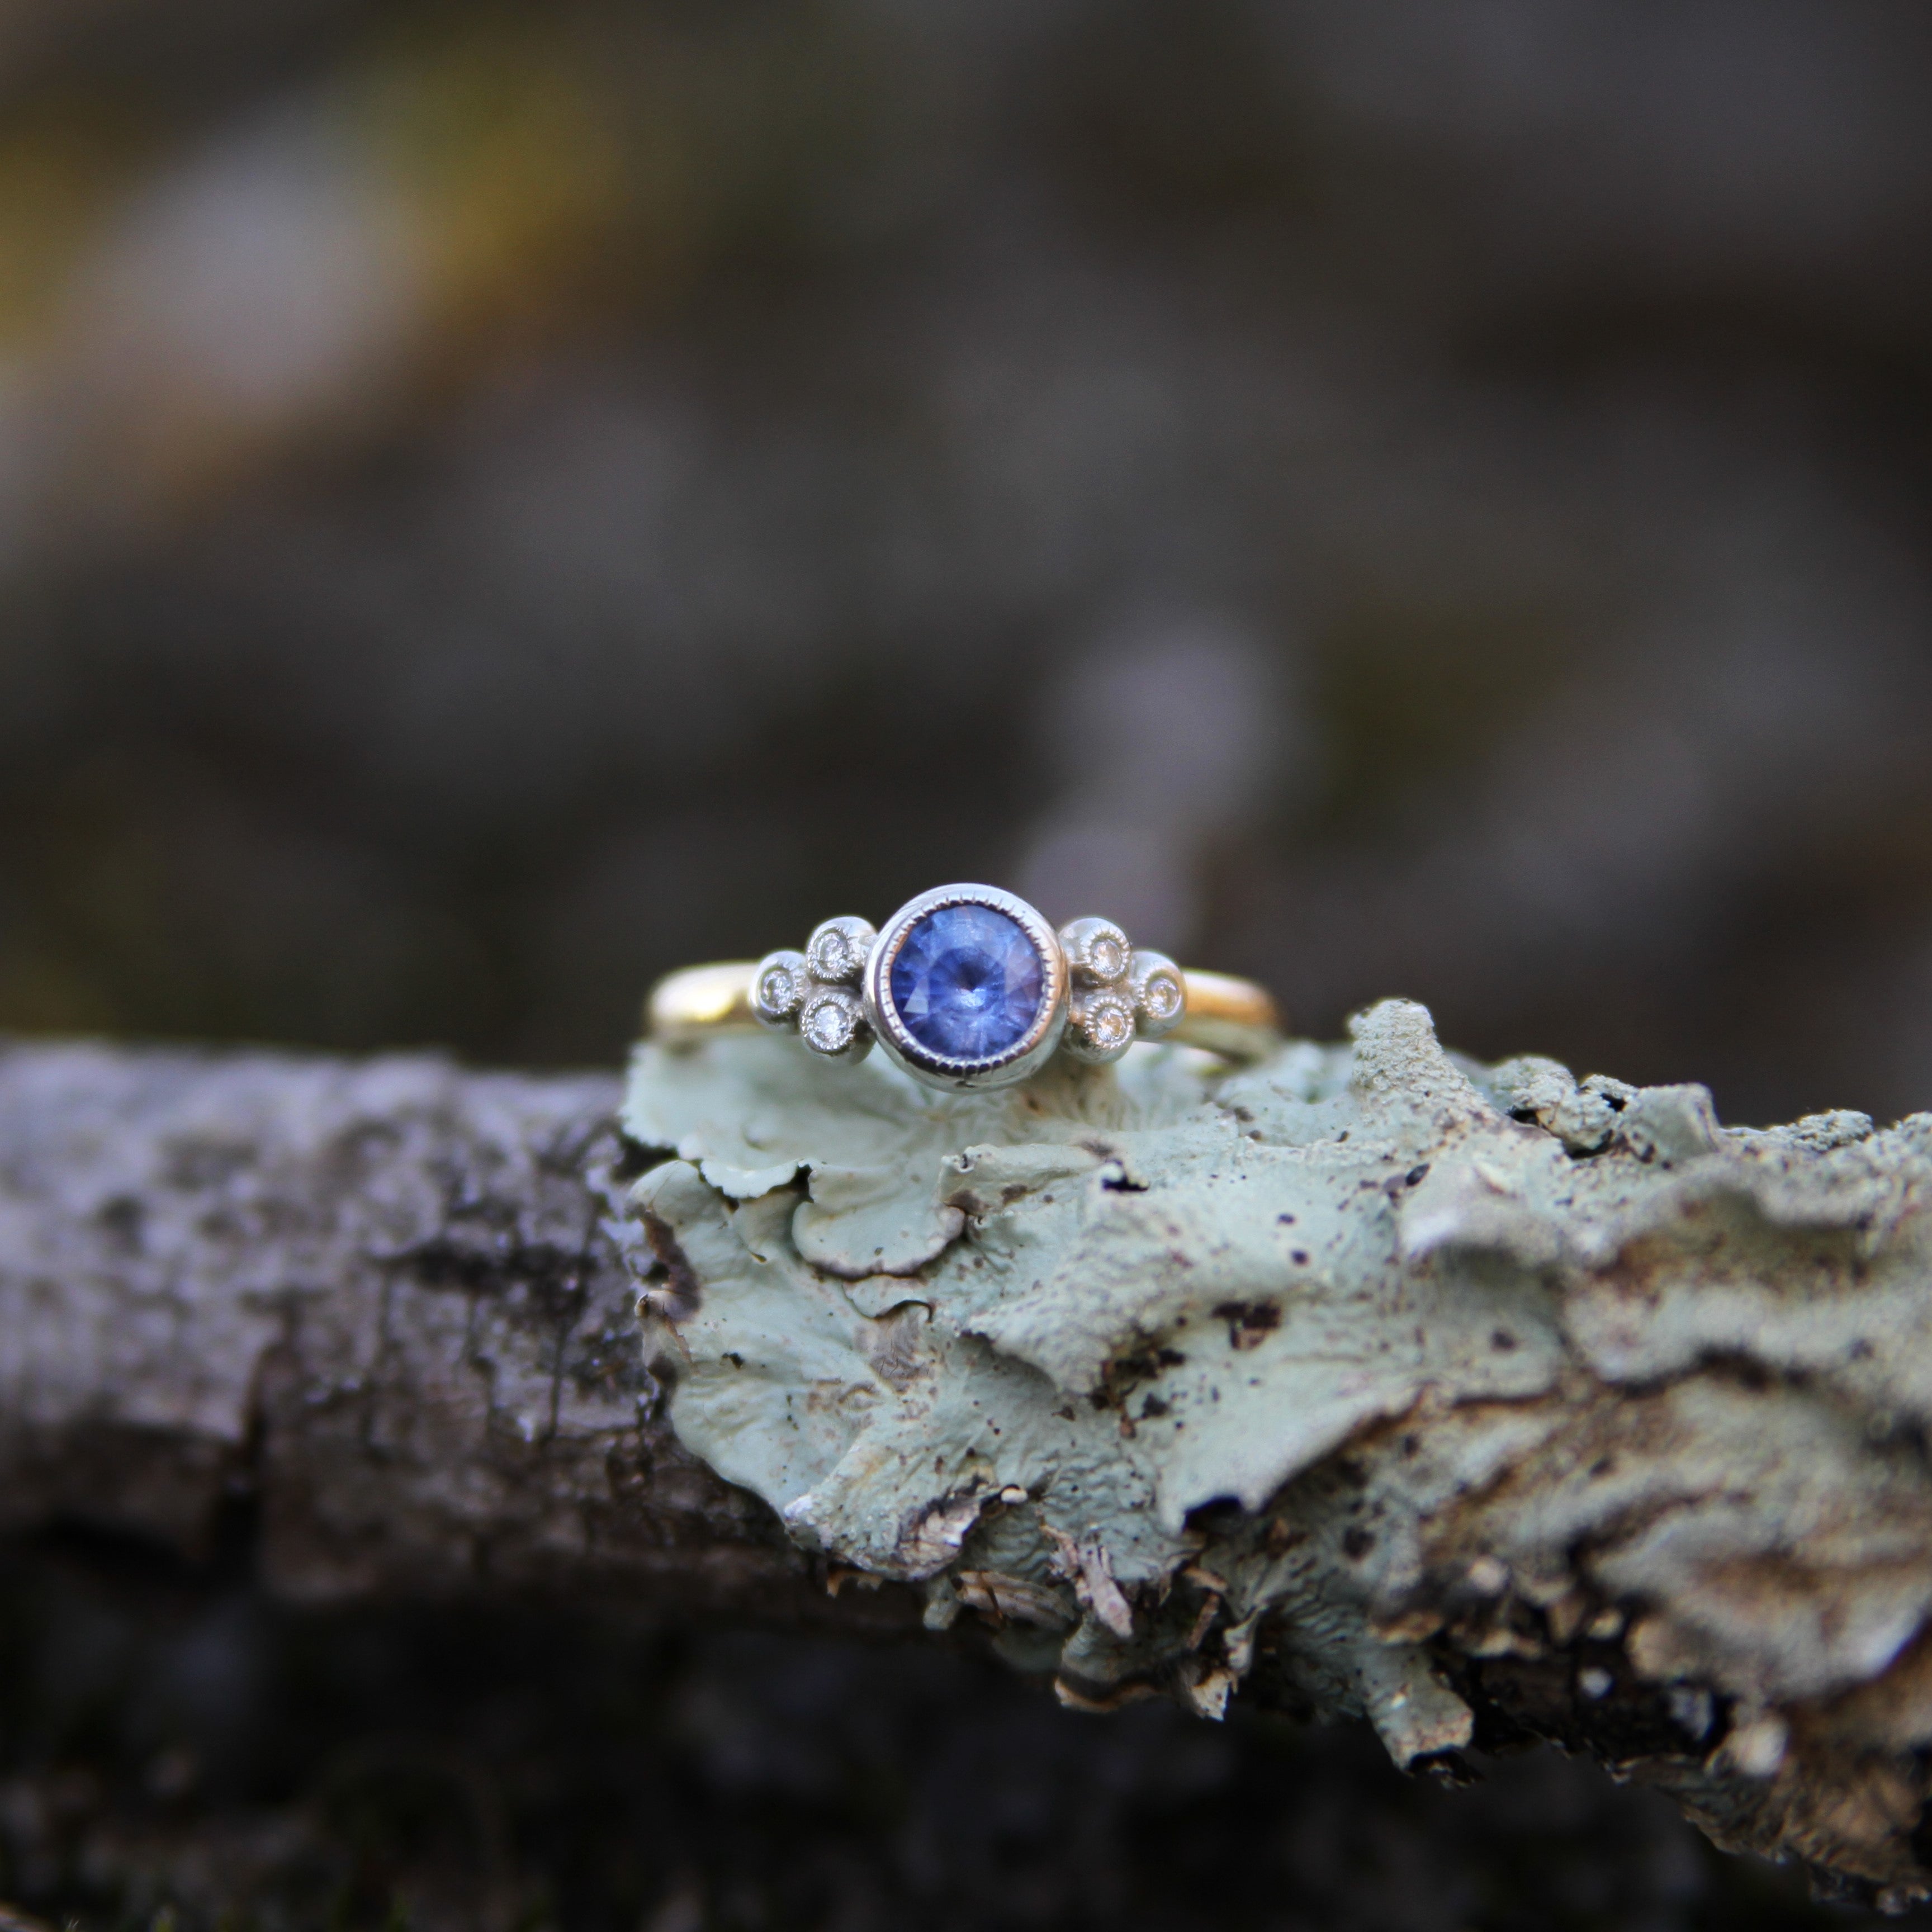 Beautiful Diamond Engagement ring designs | Diamond jewellery designs # diamond #engagement #ring - YouTube